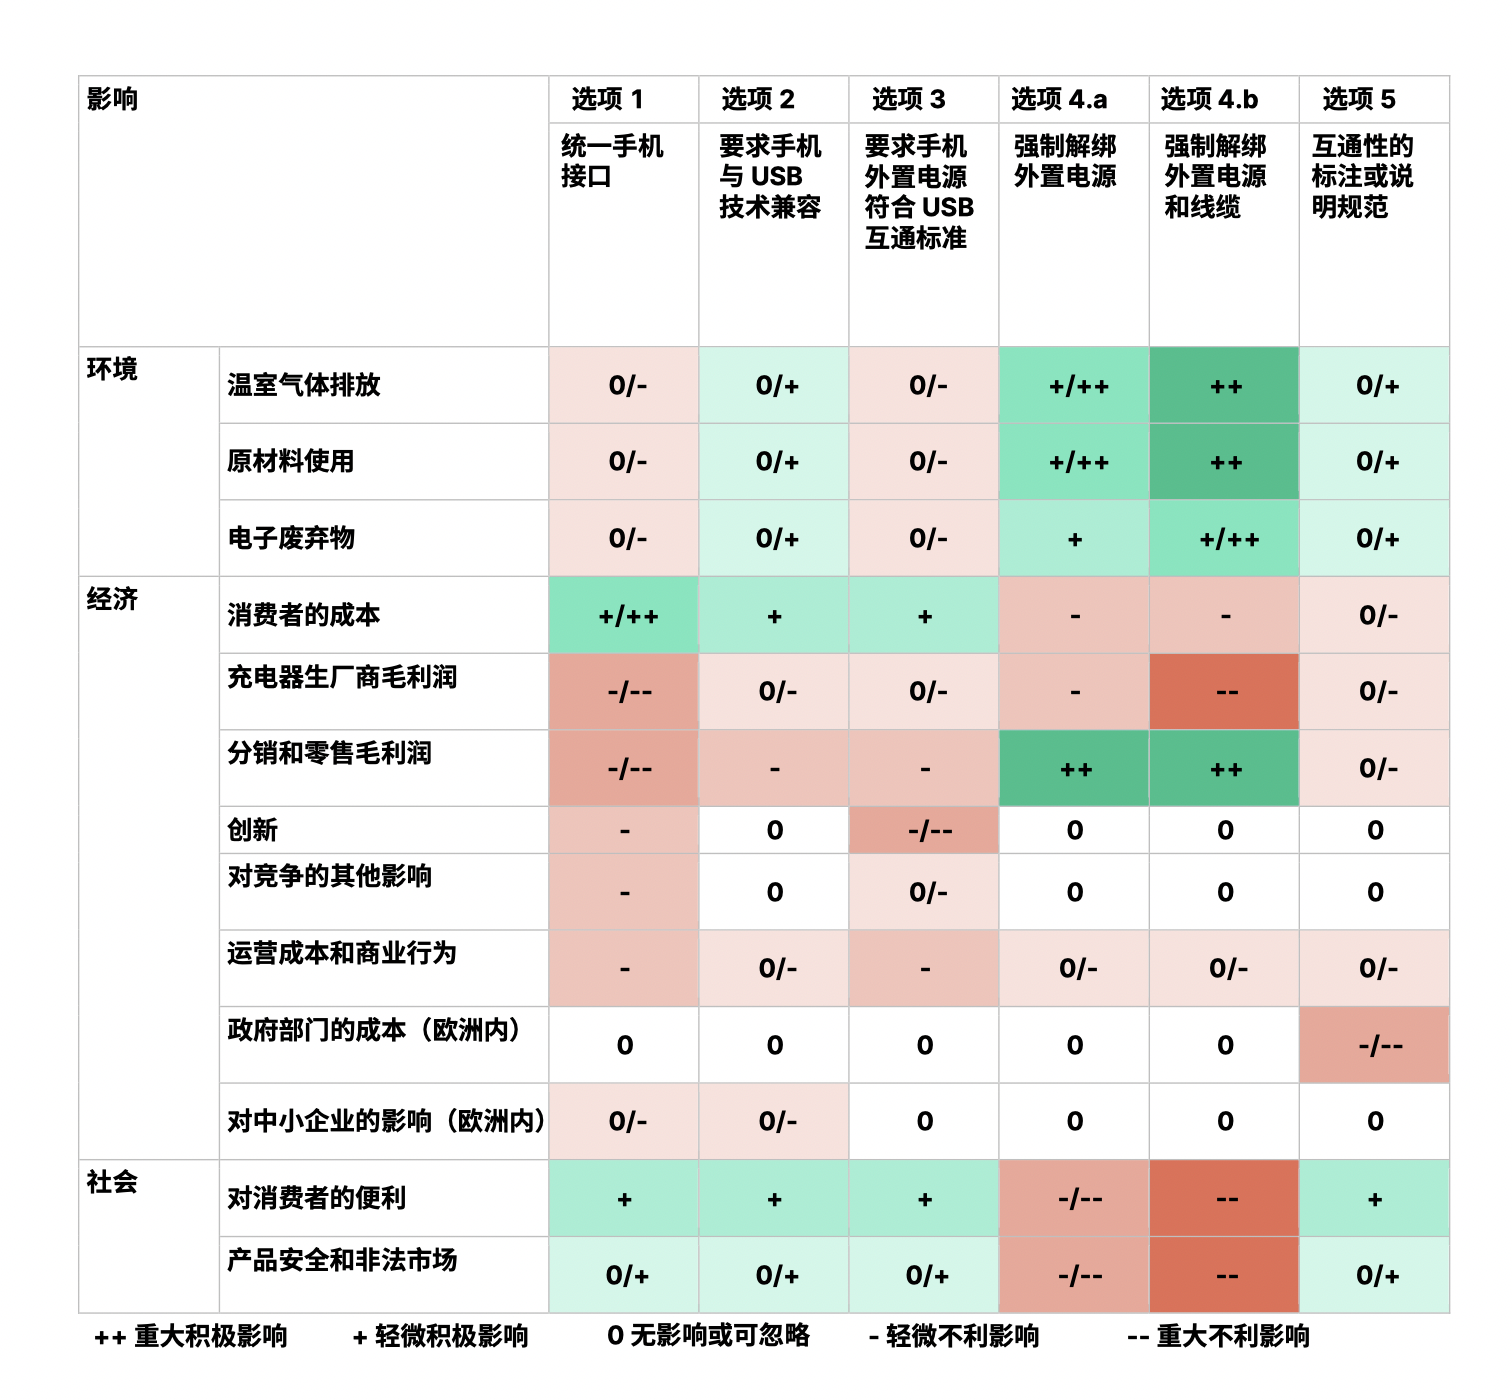 来源：Impact Assessment Study to Assess Unbundling of Chargers，中文为自行翻译